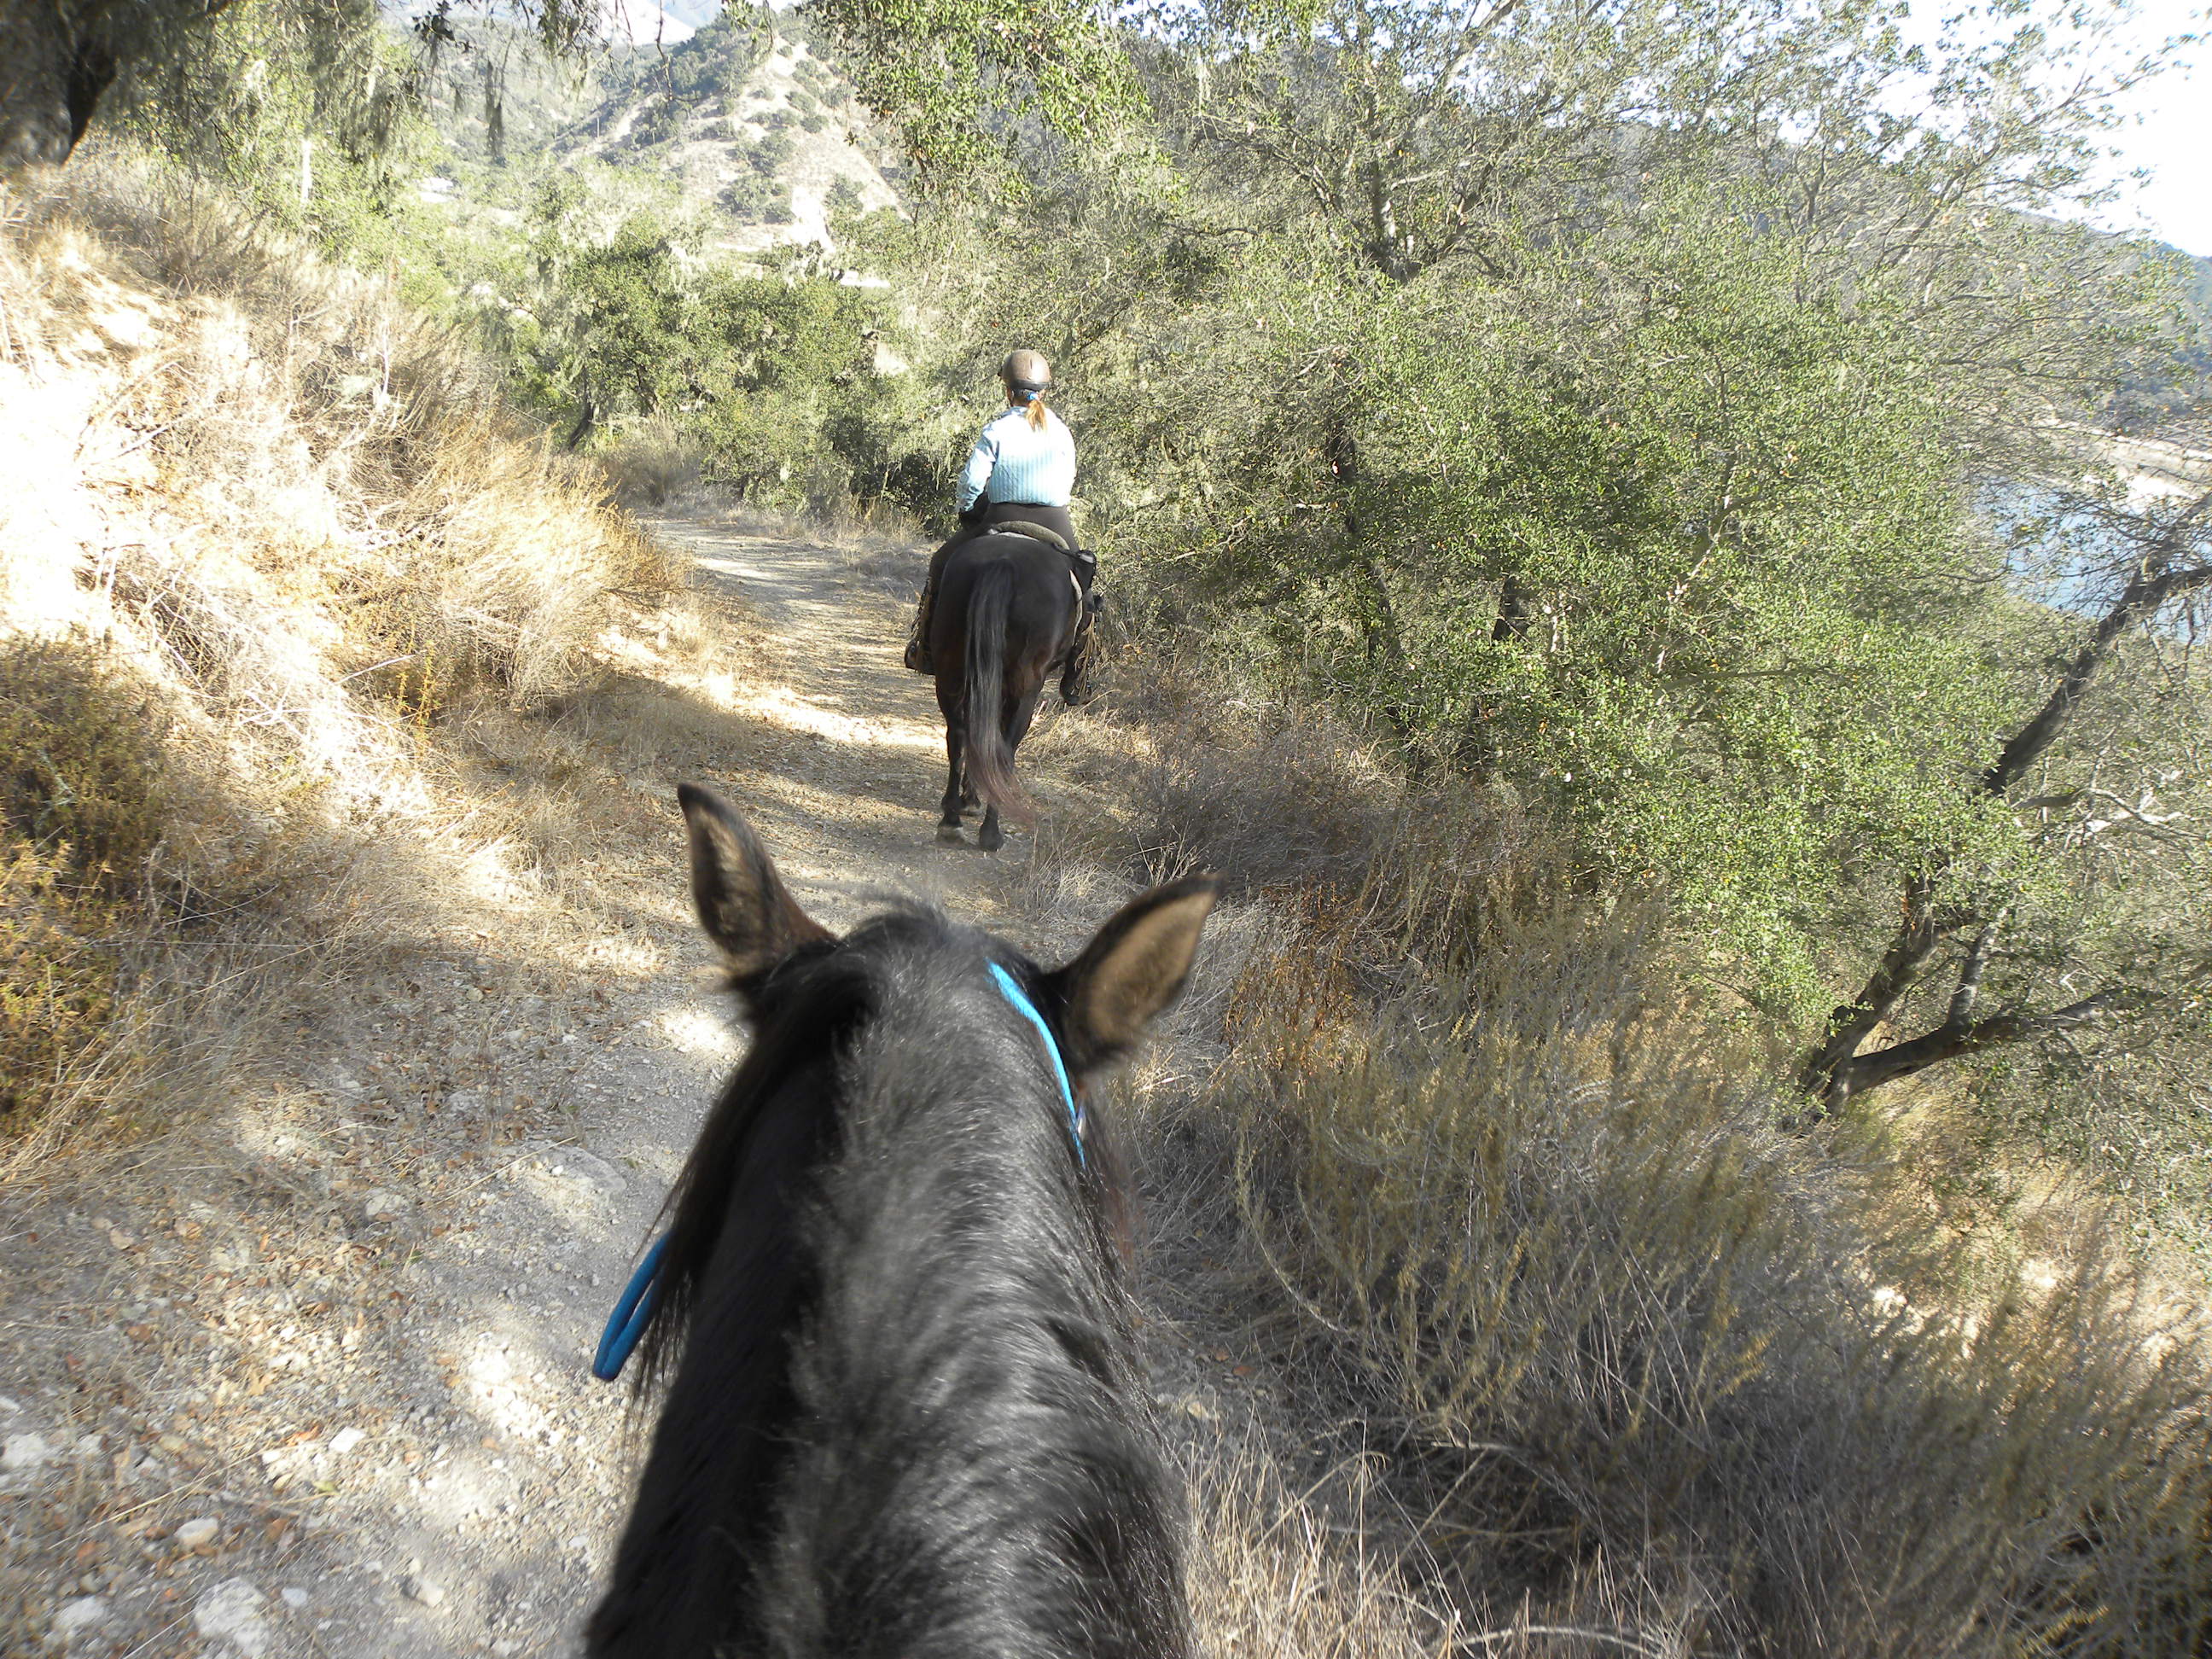 Duna Vista Loop Trail – Lopez Lake : Riding the SLO County Trails | SLO Horse News